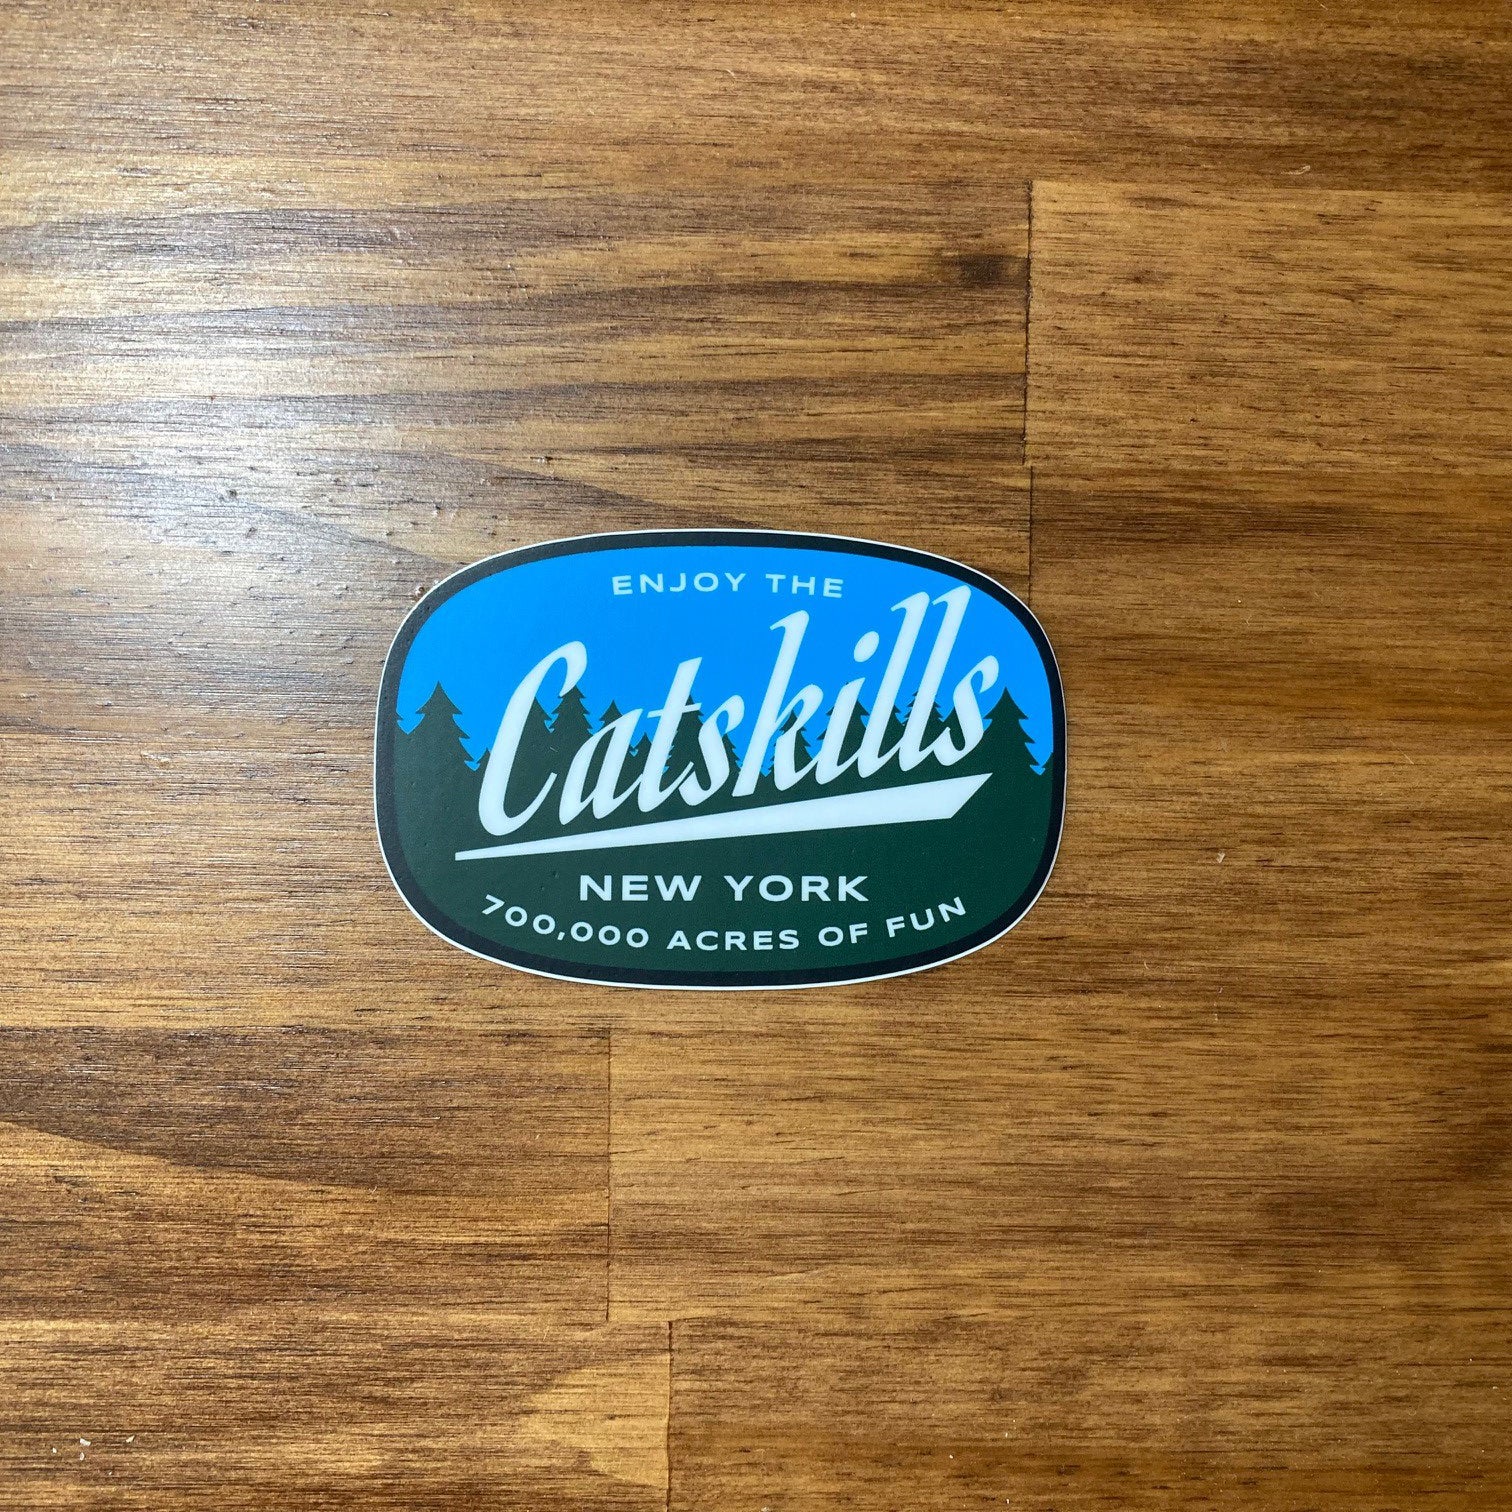 Enjoy the Catskills Stickers - 3 Pack